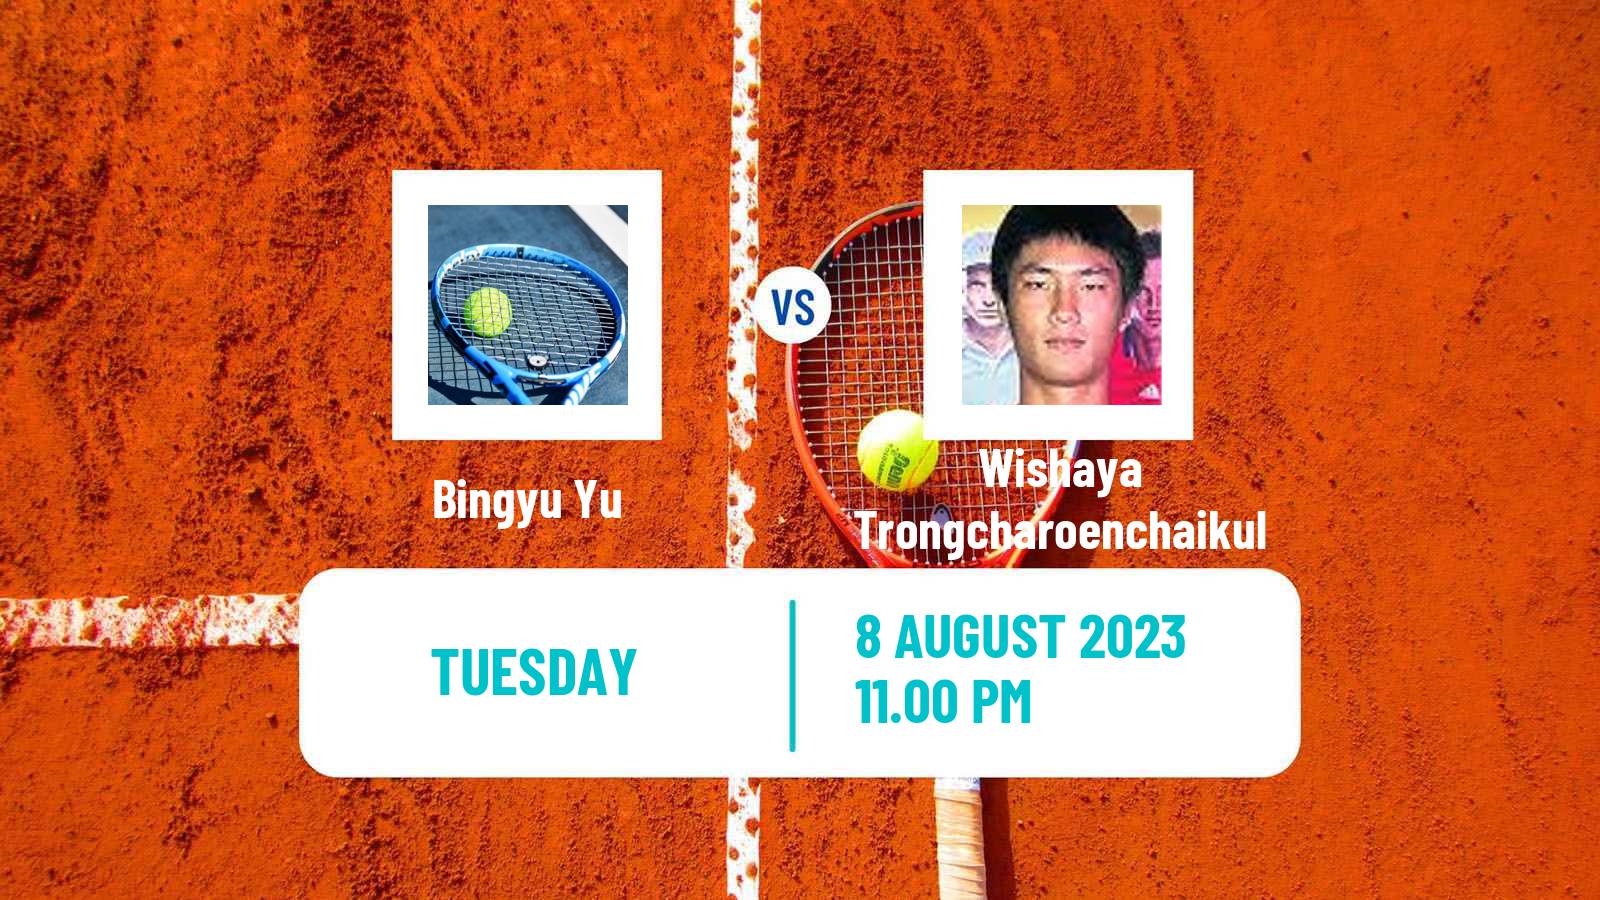 Tennis ITF M25 Baotou Men Bingyu Yu - Wishaya Trongcharoenchaikul